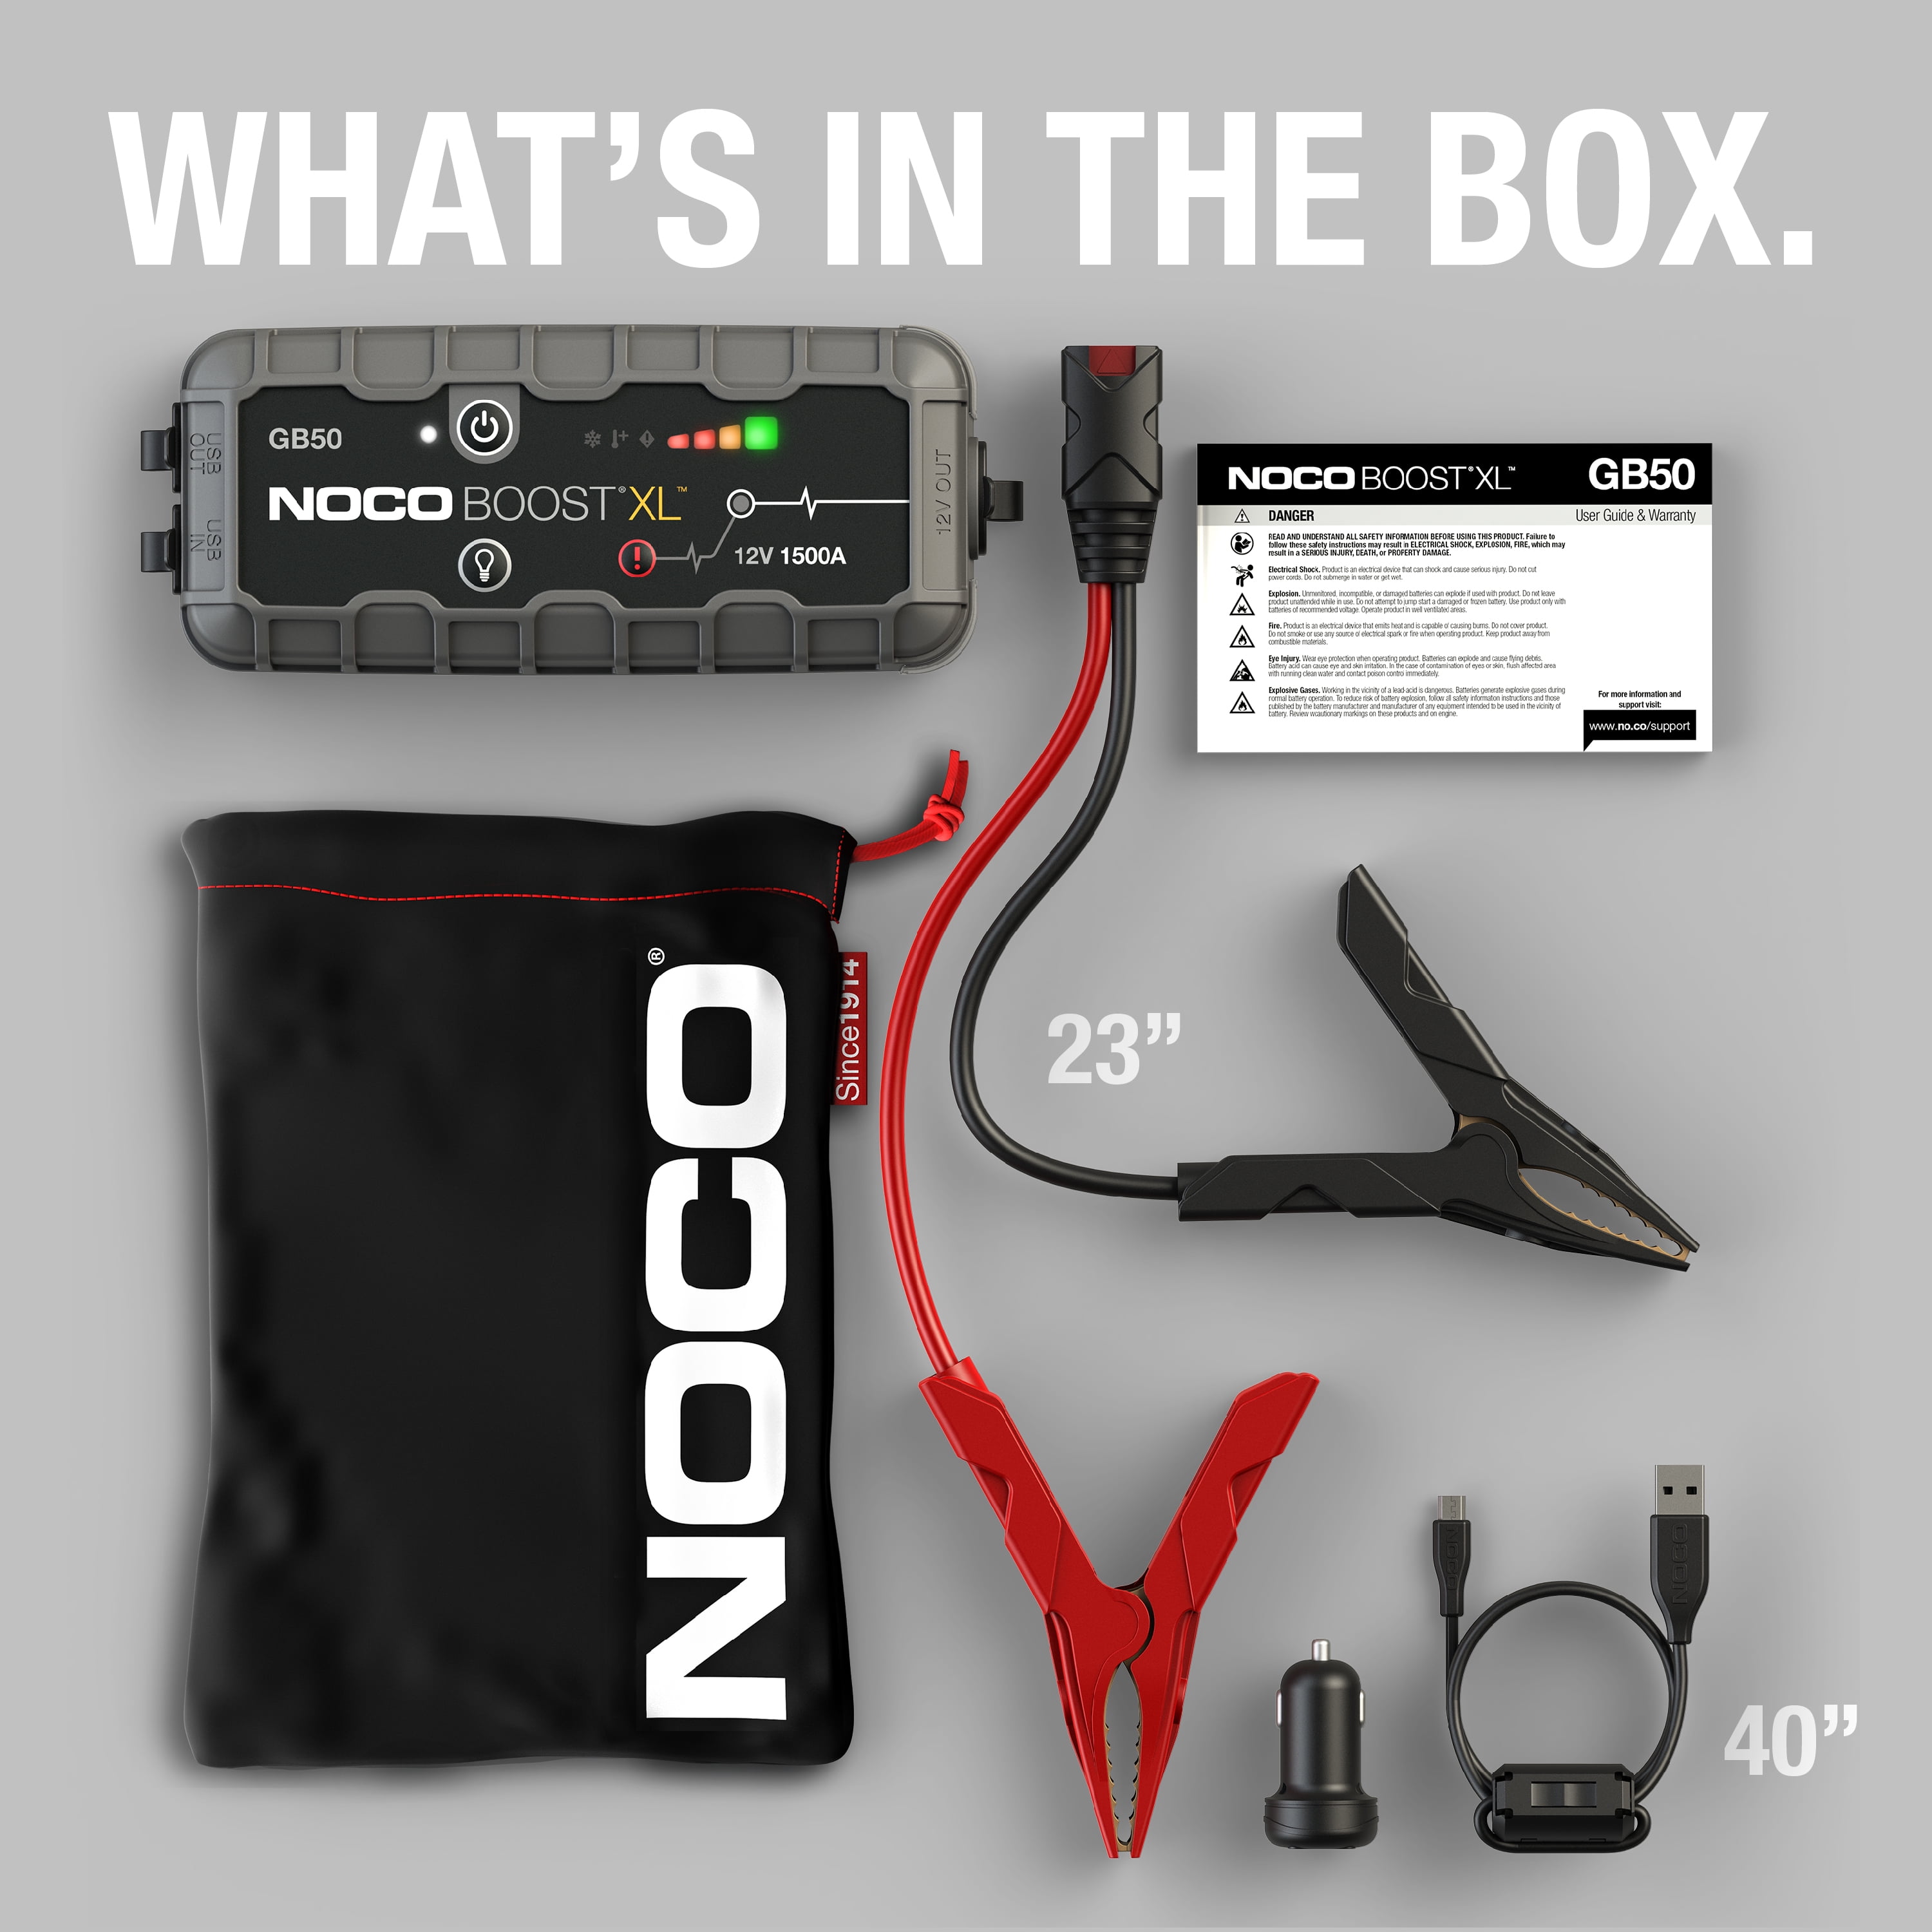 NOCO Boost XL GB50 1500A 12V UltraSafe Portable Lithium Jump 